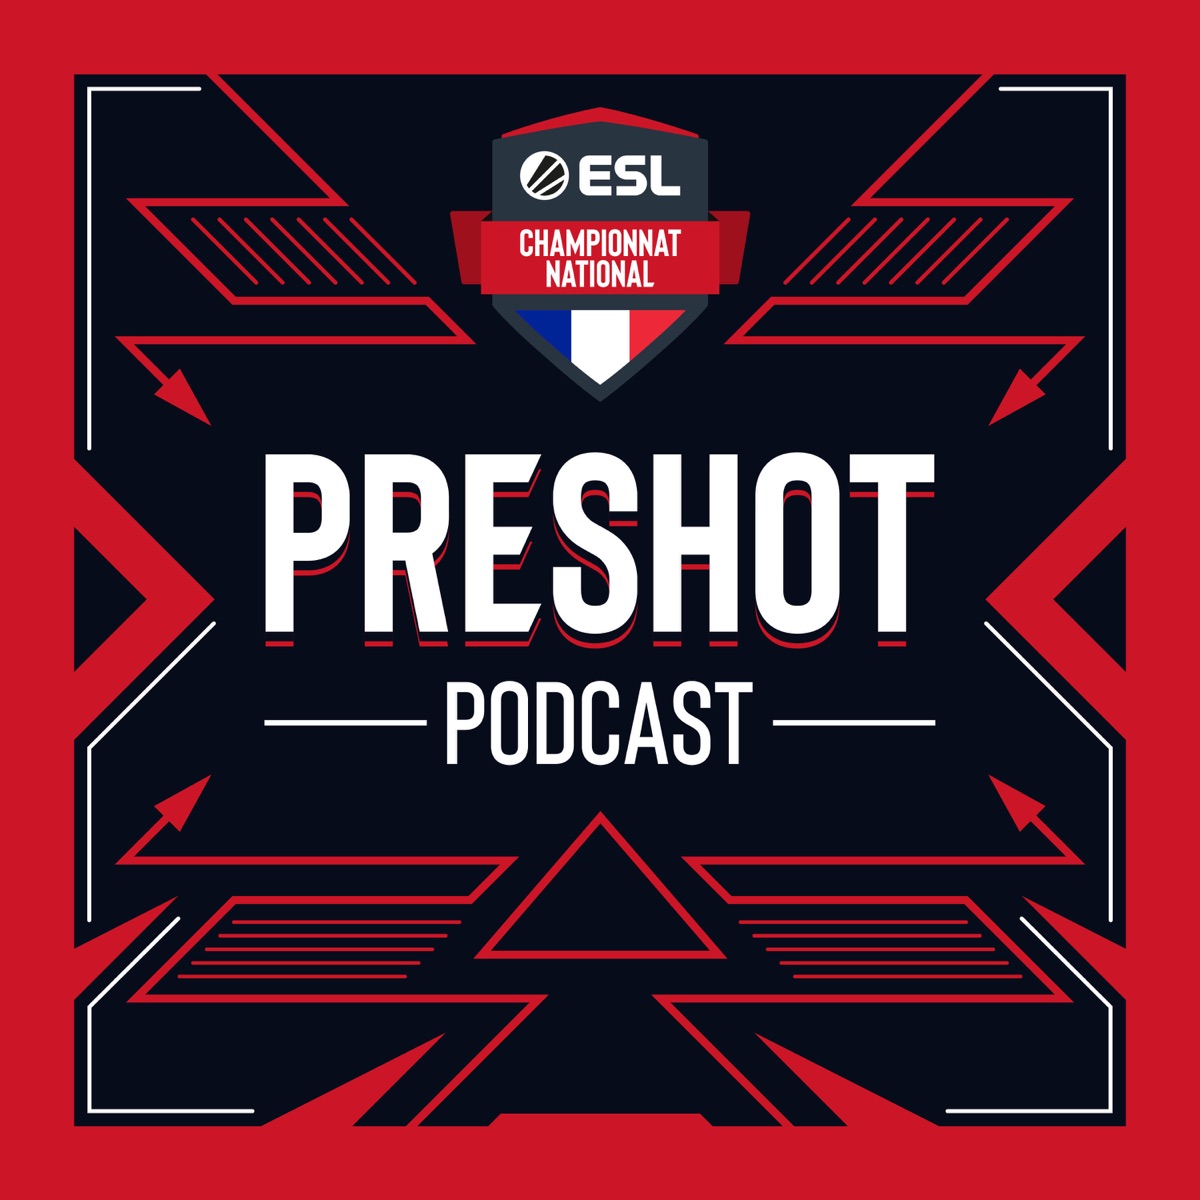 Preshot Les Talents De L Esport Podcast Podtail - brawl stars axael meilleur equipe